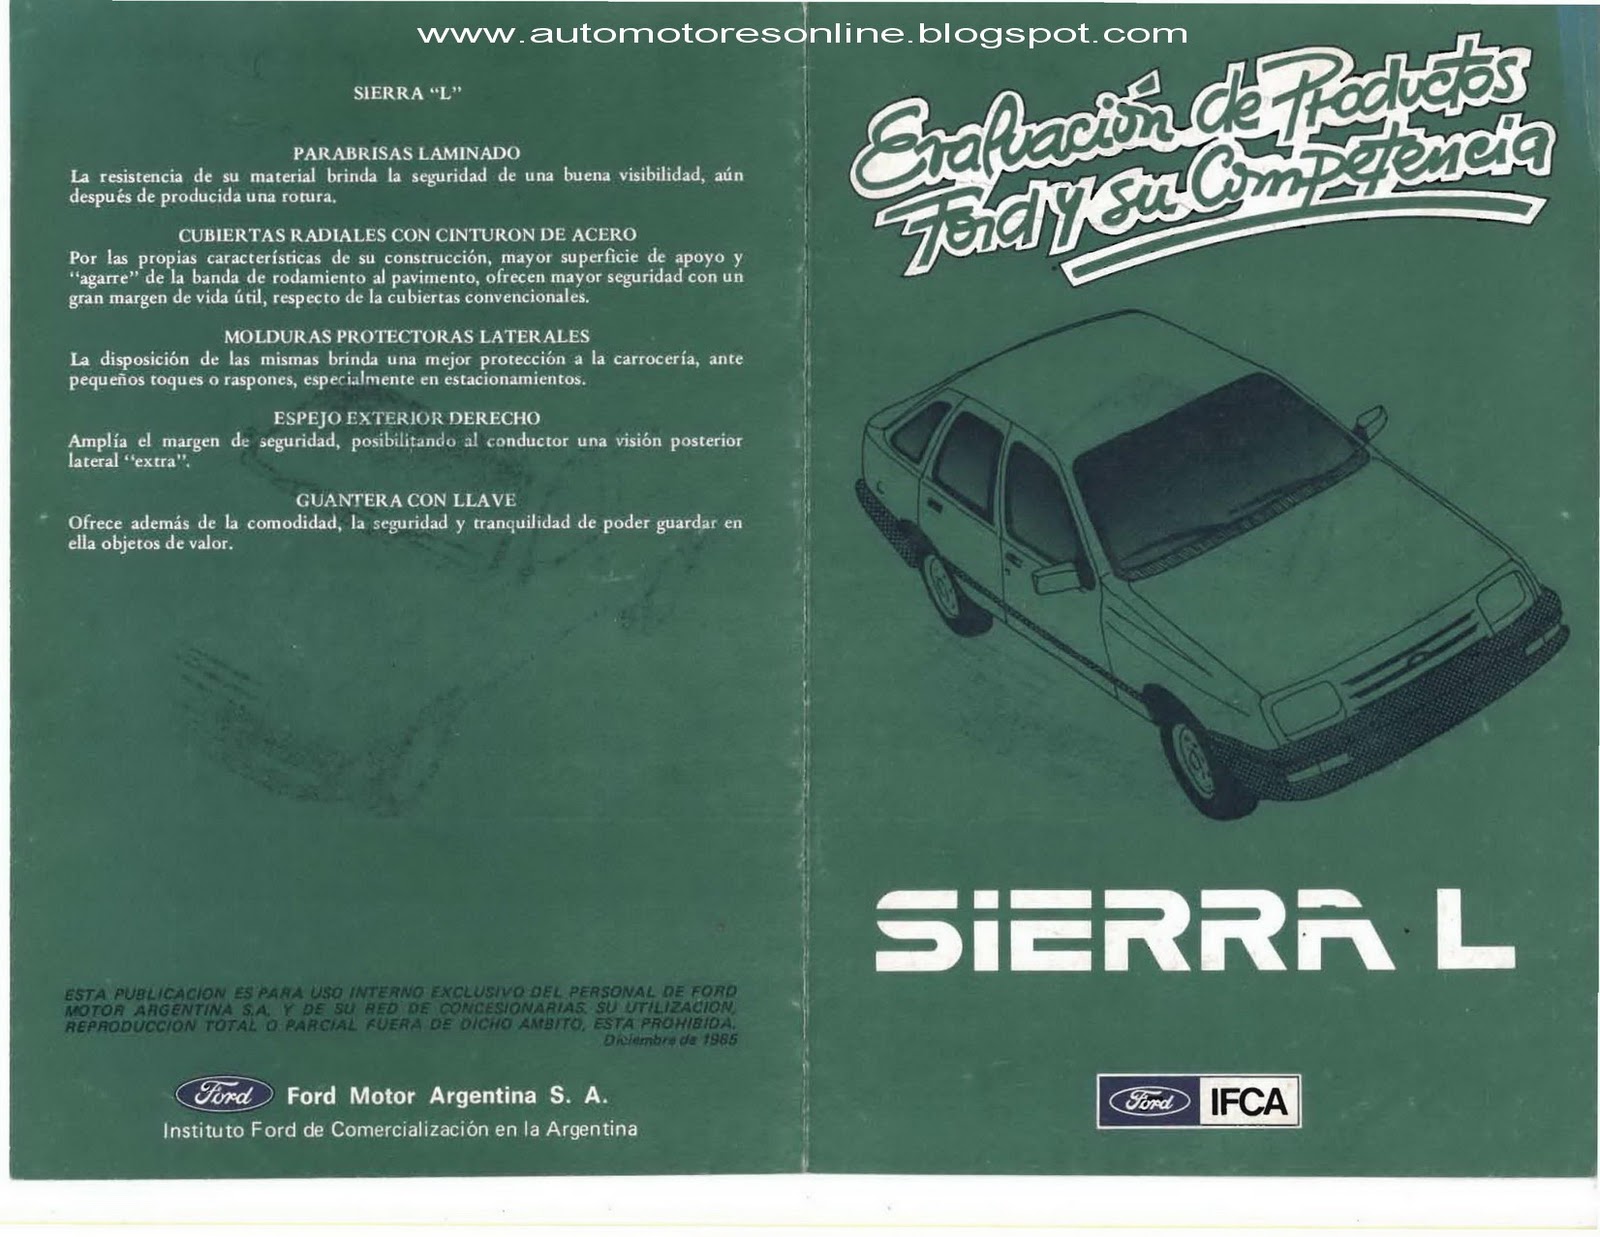 [Ford Sierra Linea Completa1_Page_3_resize[5].jpg]